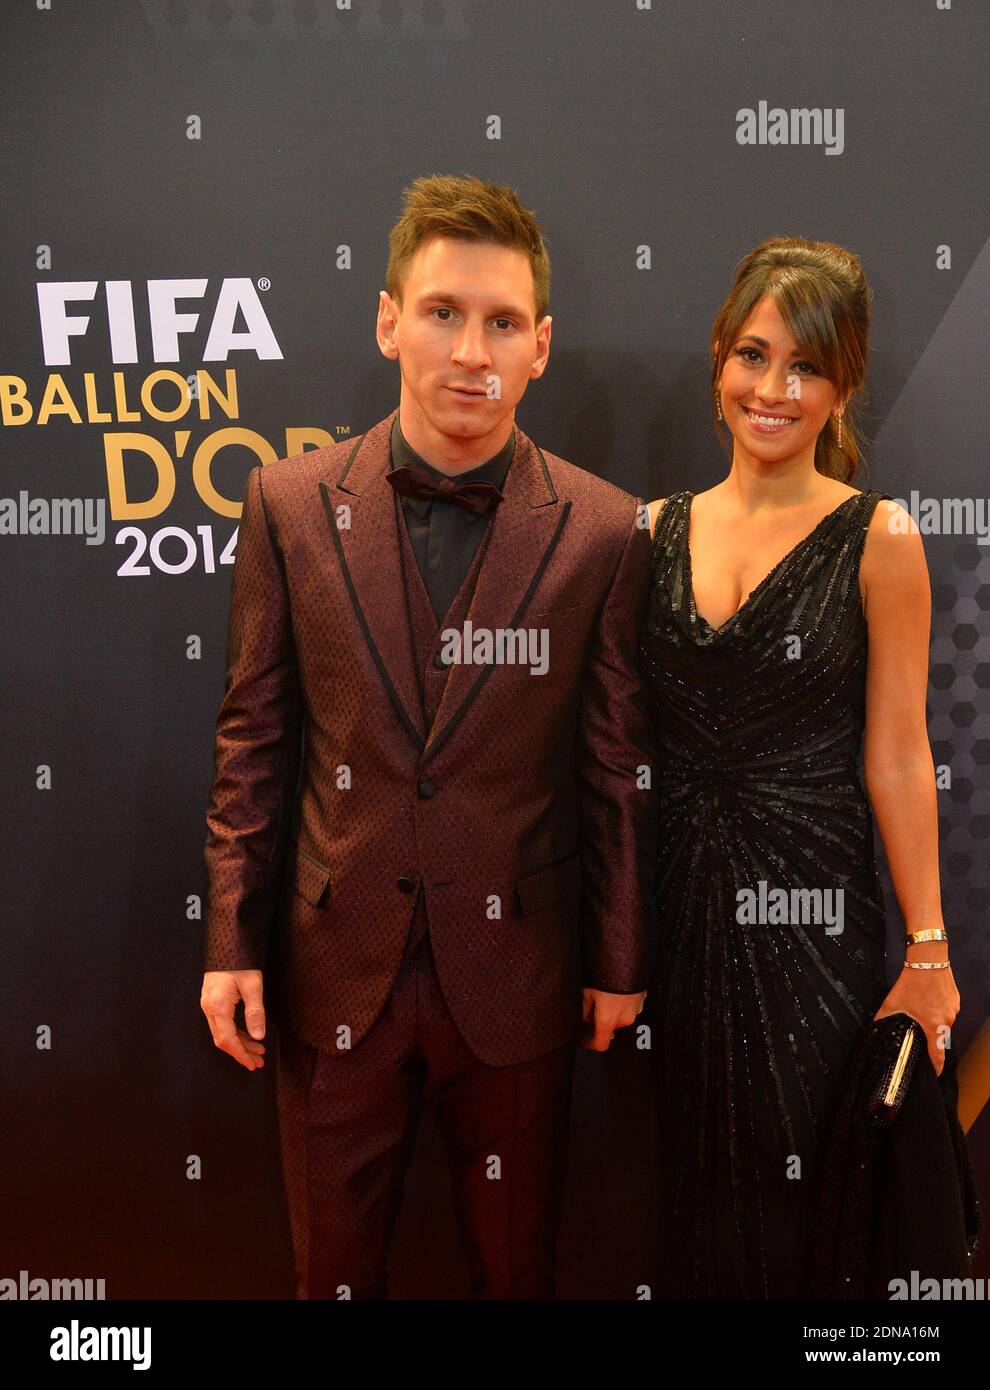 Argentina's Lionel Messi and his wife Antonella Roccuzzo arriving at the  FIFA Ballon d'Or 2014